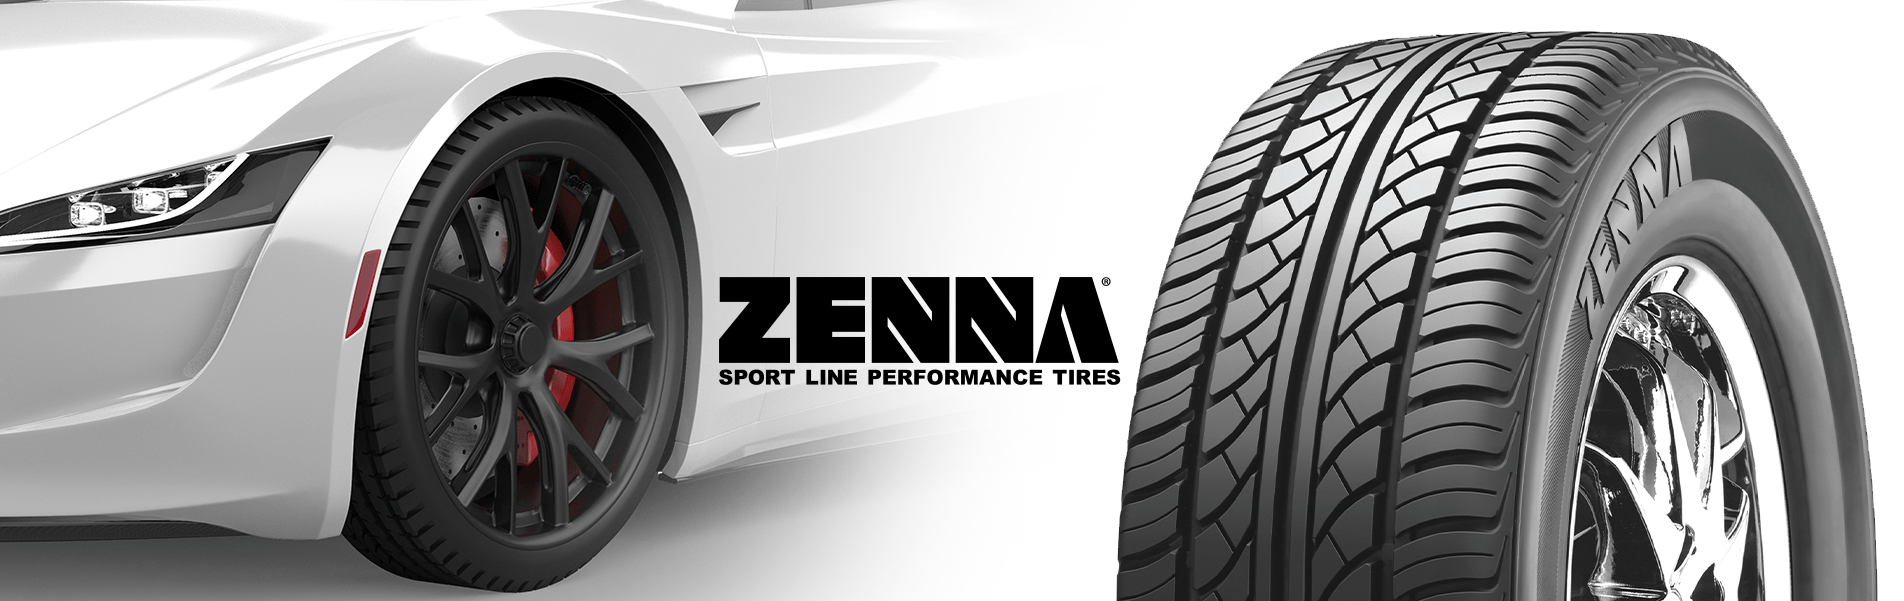 Zenna Sport Line Performance tires